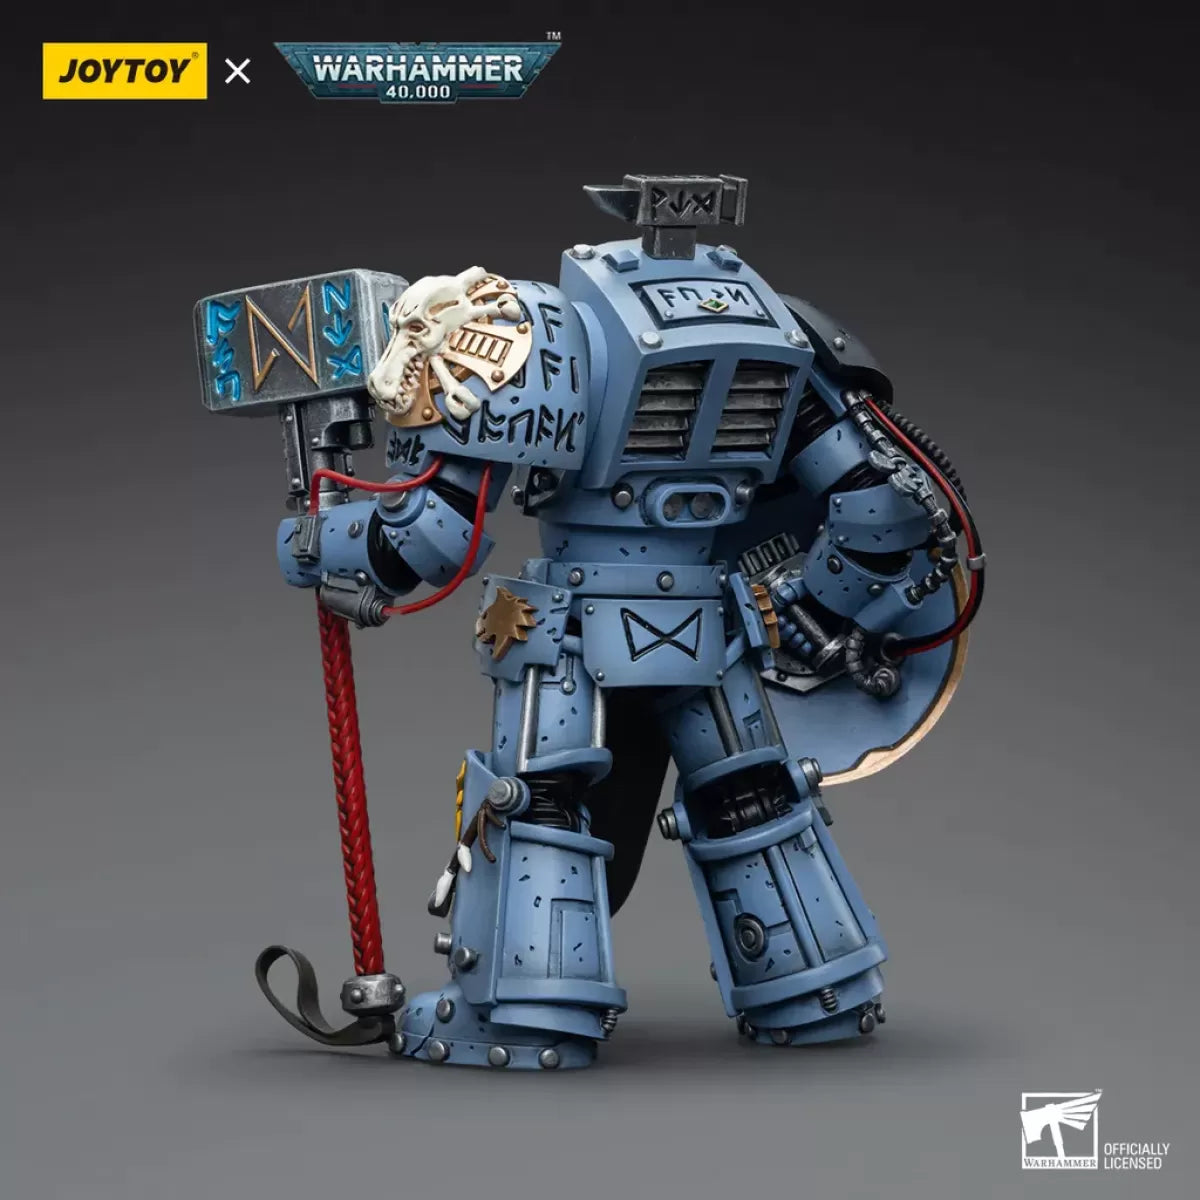 Joy toy Warhammer 40K Action Figure 1/18 Space Marines Space Wolves  Venerable Dreadnought Brother Hvor 20 cm Figure Golden